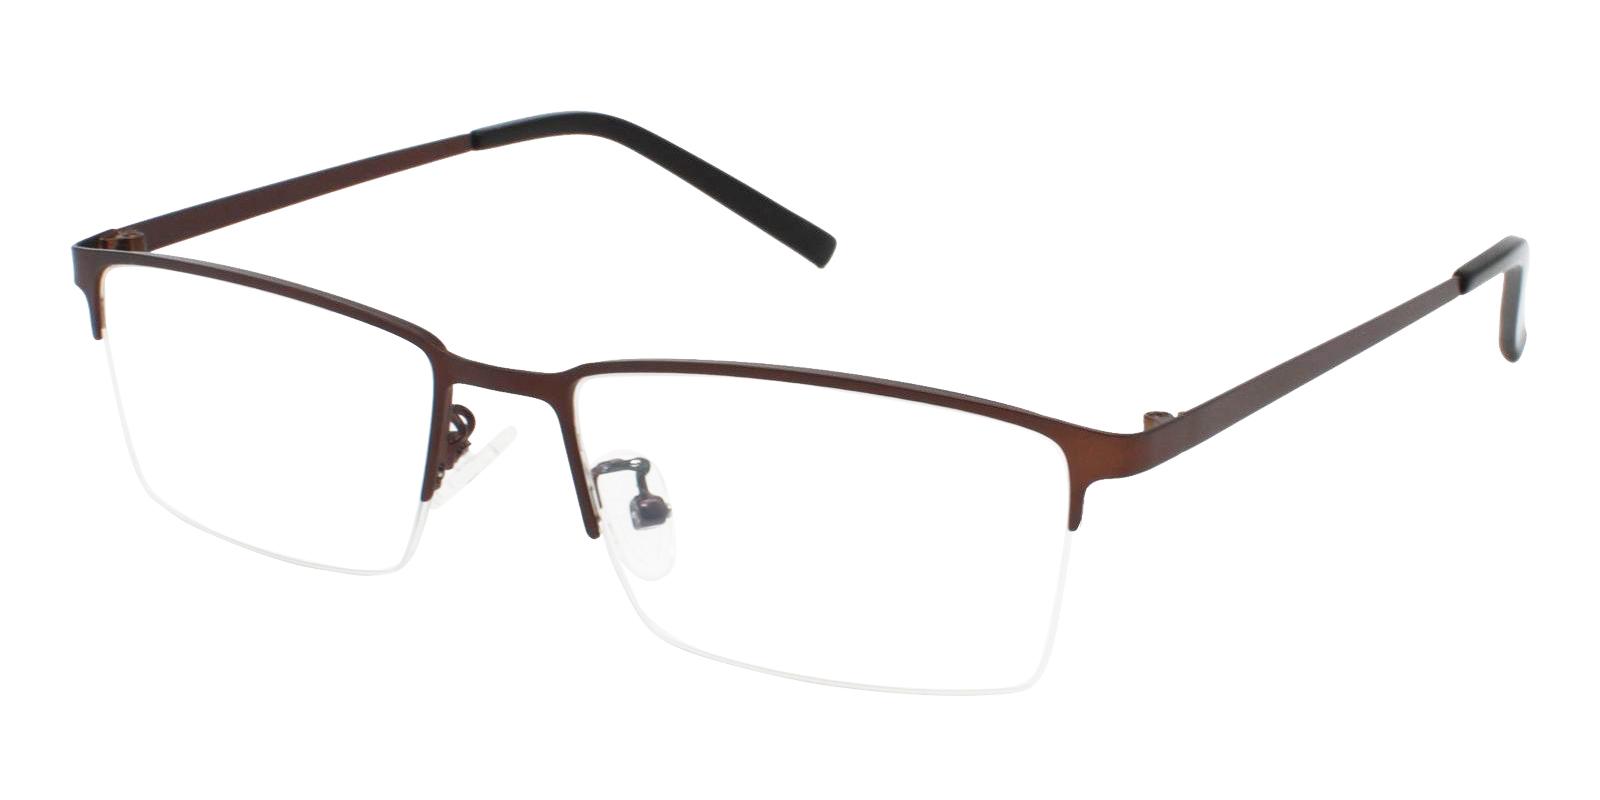 Alexander Brown Metal Eyeglasses , NosePads Frames from ABBE Glasses